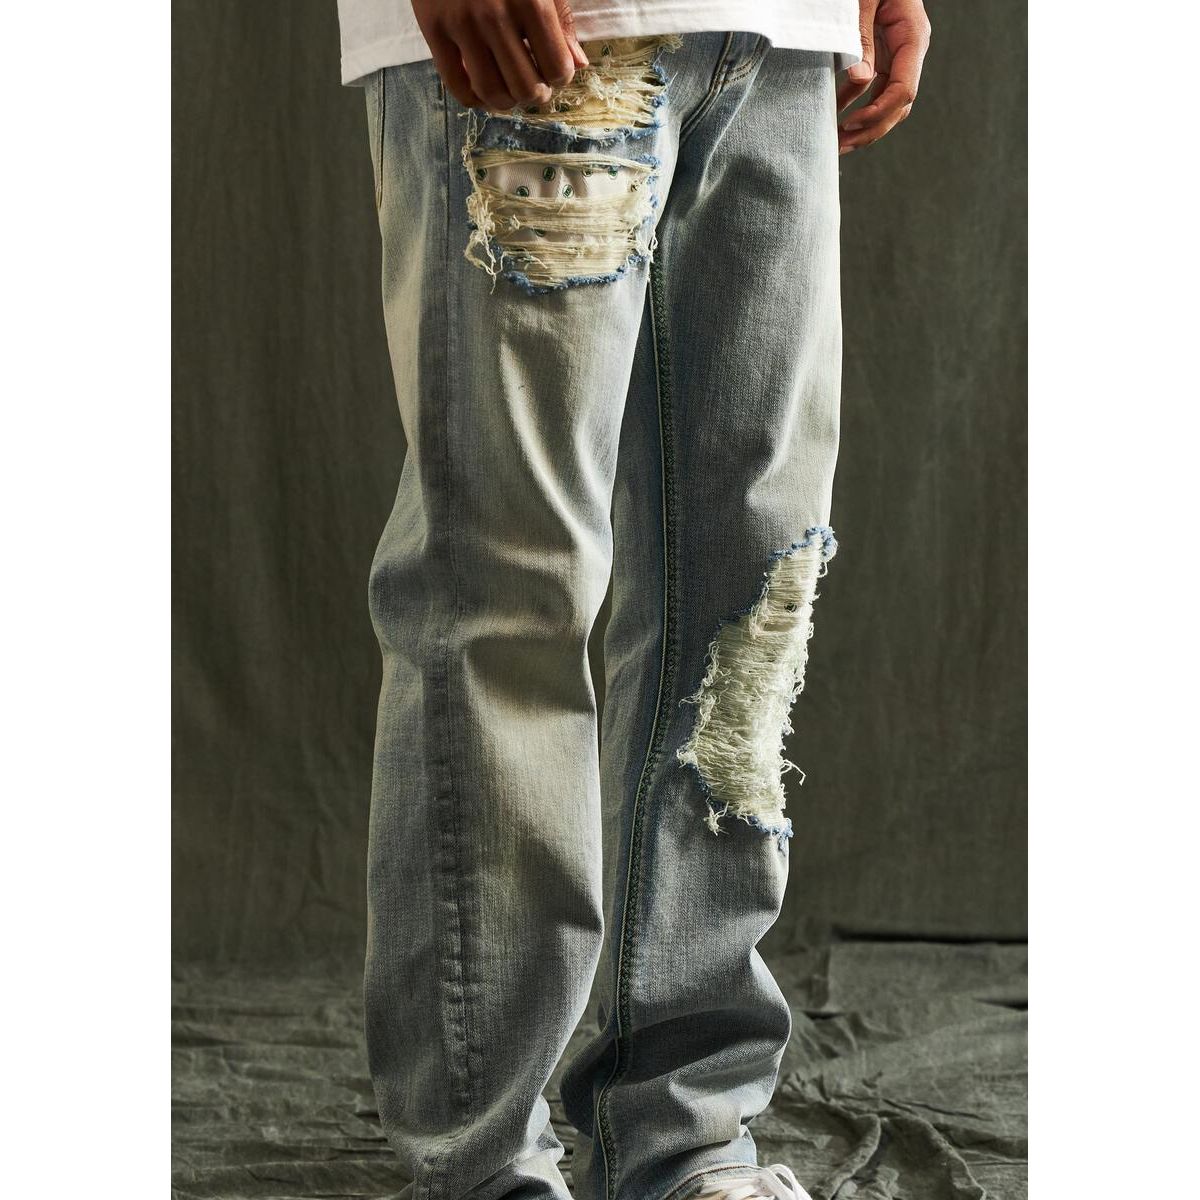 Embellish Gaskarth Light Stone Denim Jeans (EMBFALL123-039)